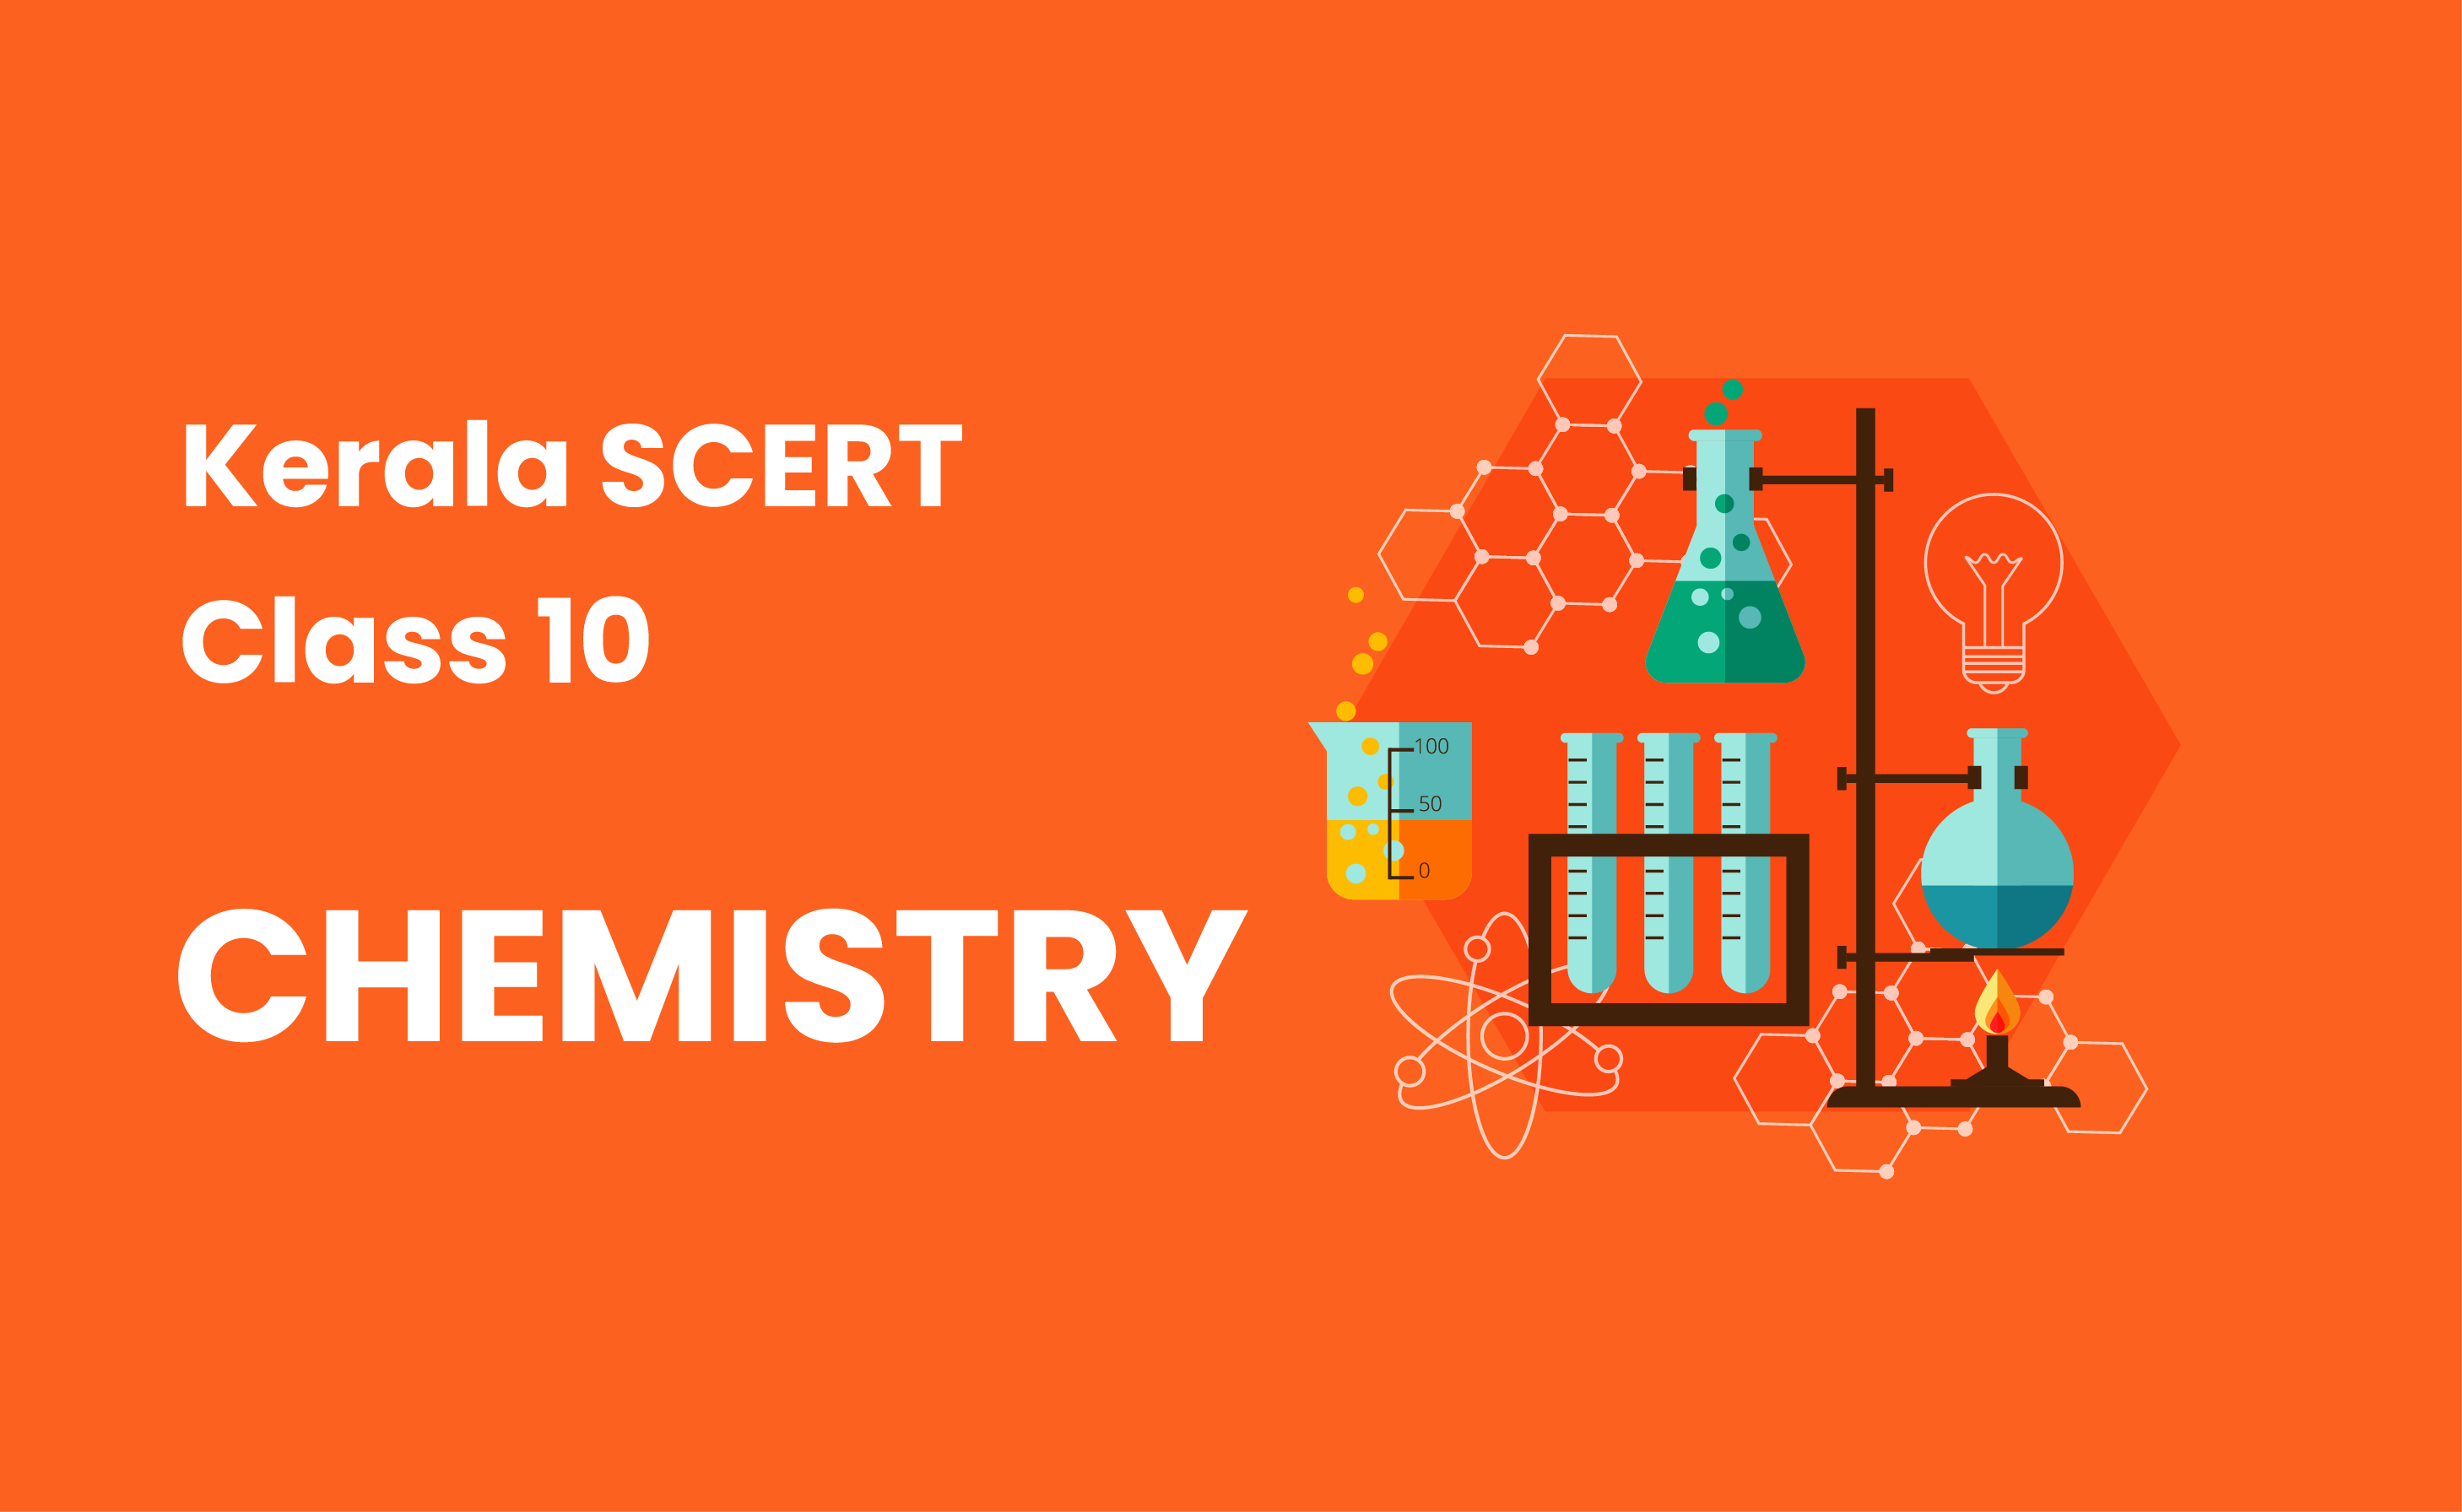 SCERT Class 10 Chemistry in Malayalam